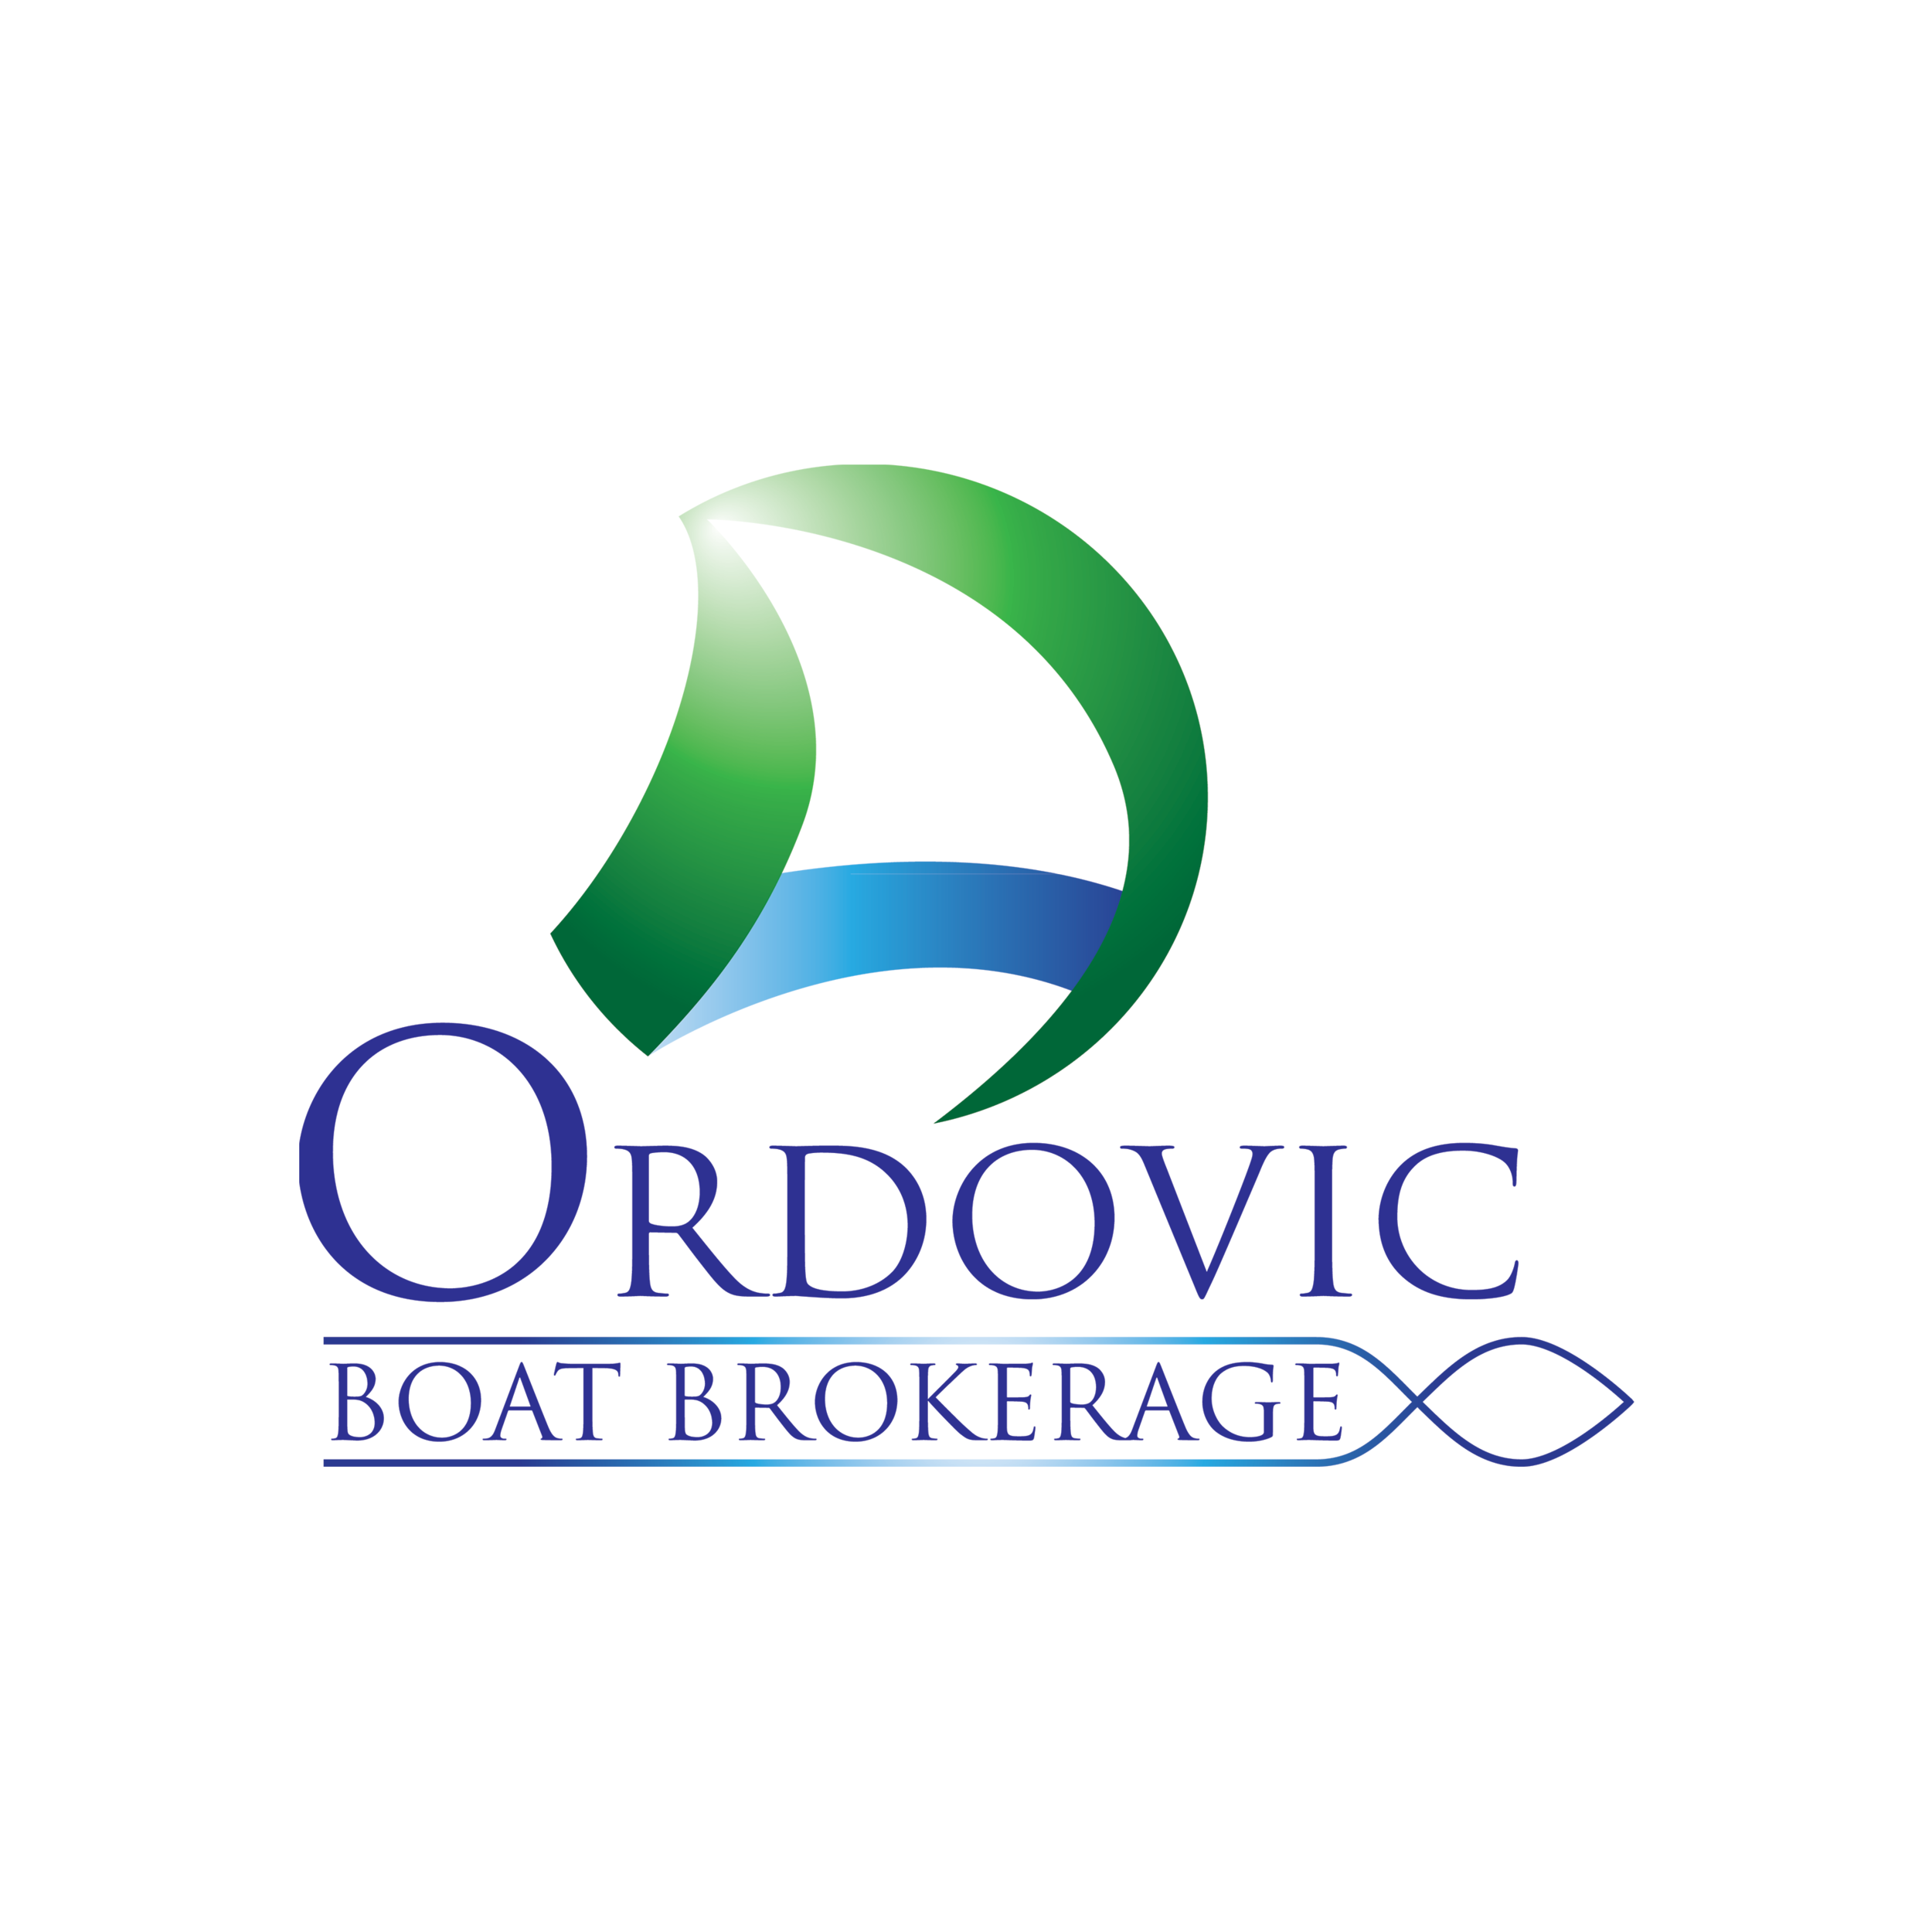 ordovic boat brokerage | boat brokerage north wales | boat brokerage UK